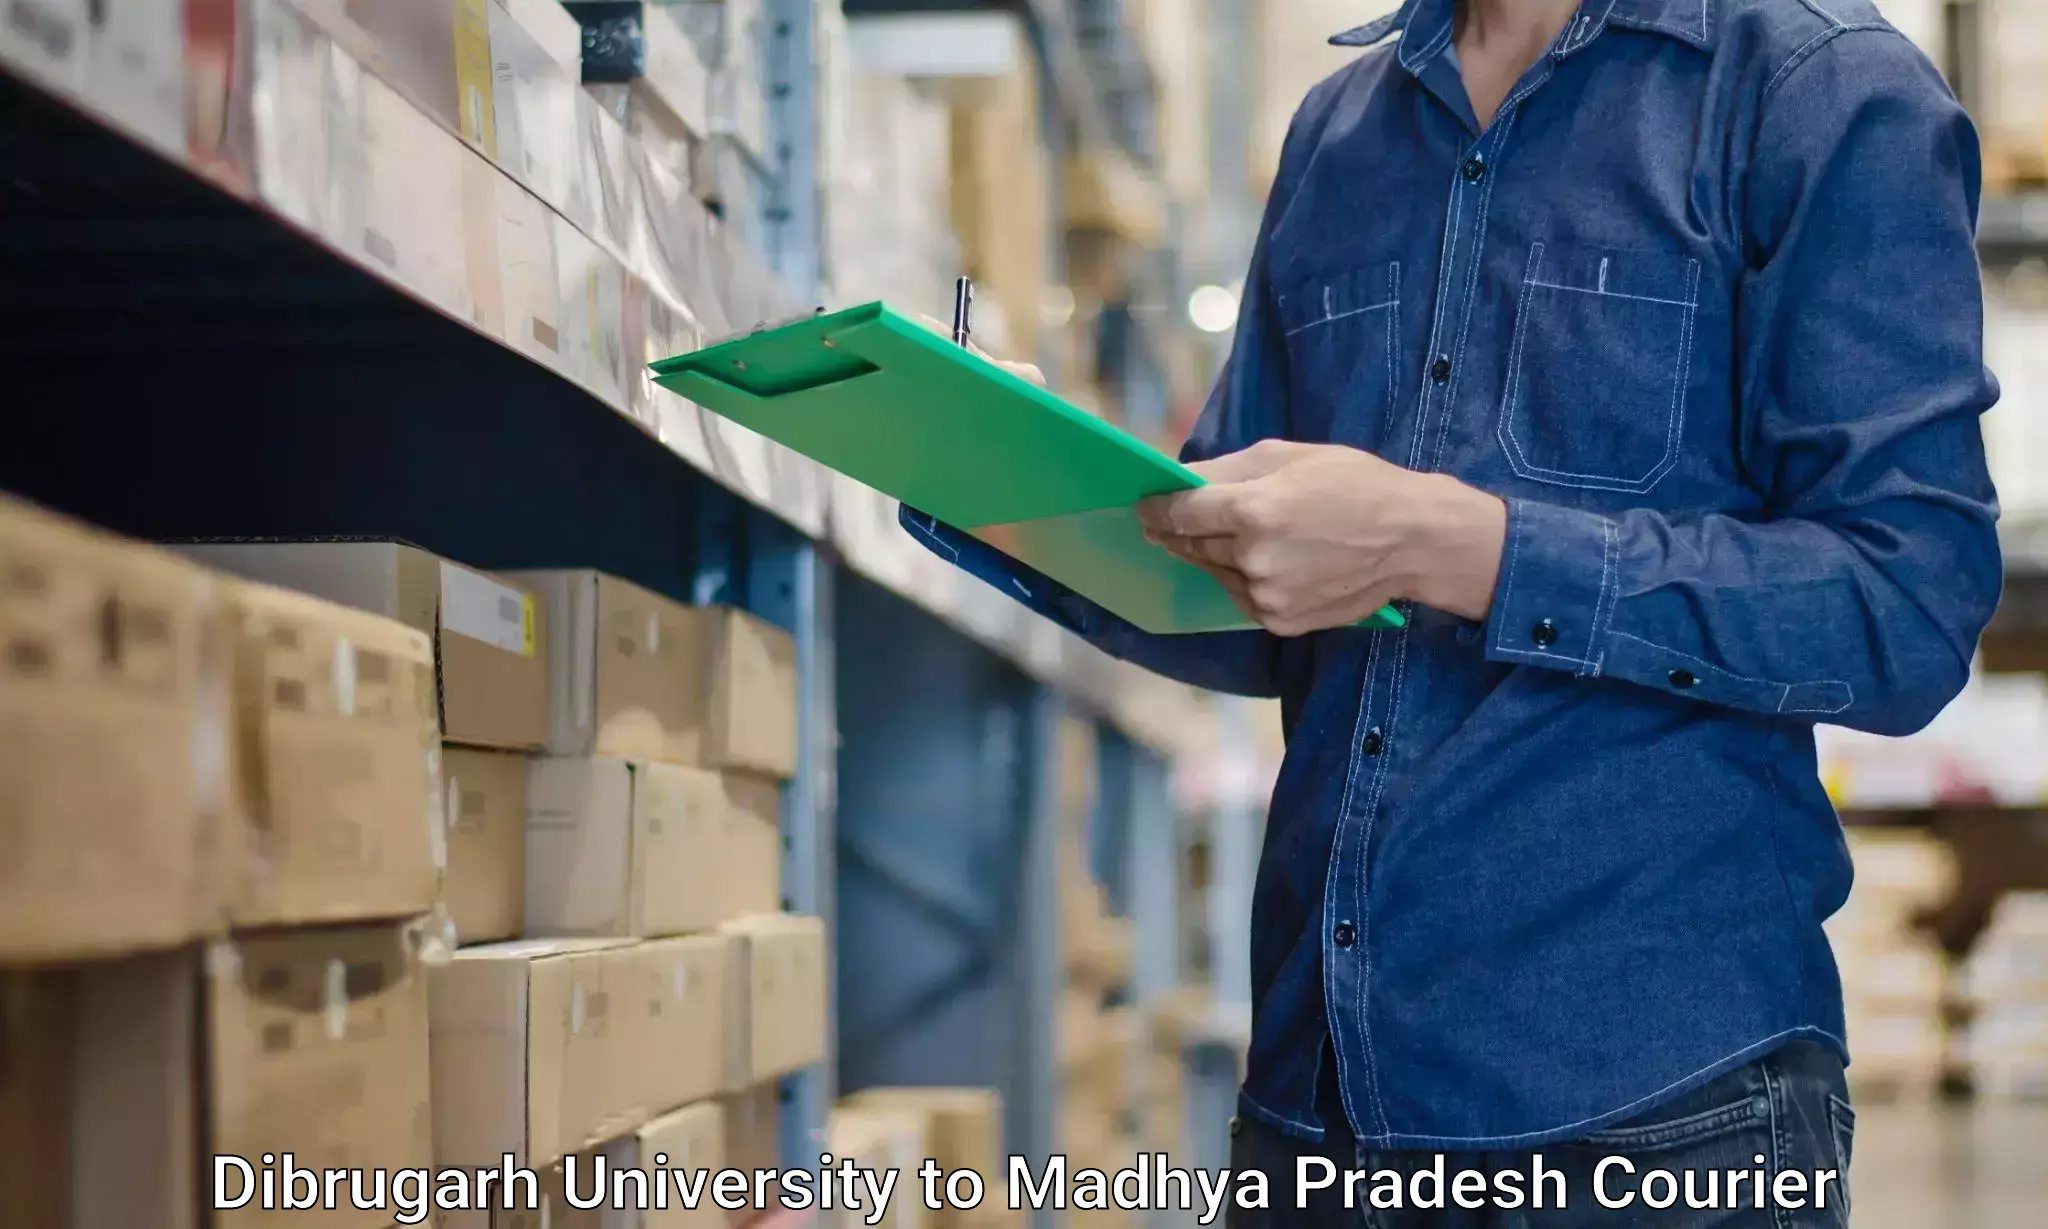 Moving service excellence Dibrugarh University to Madhya Pradesh